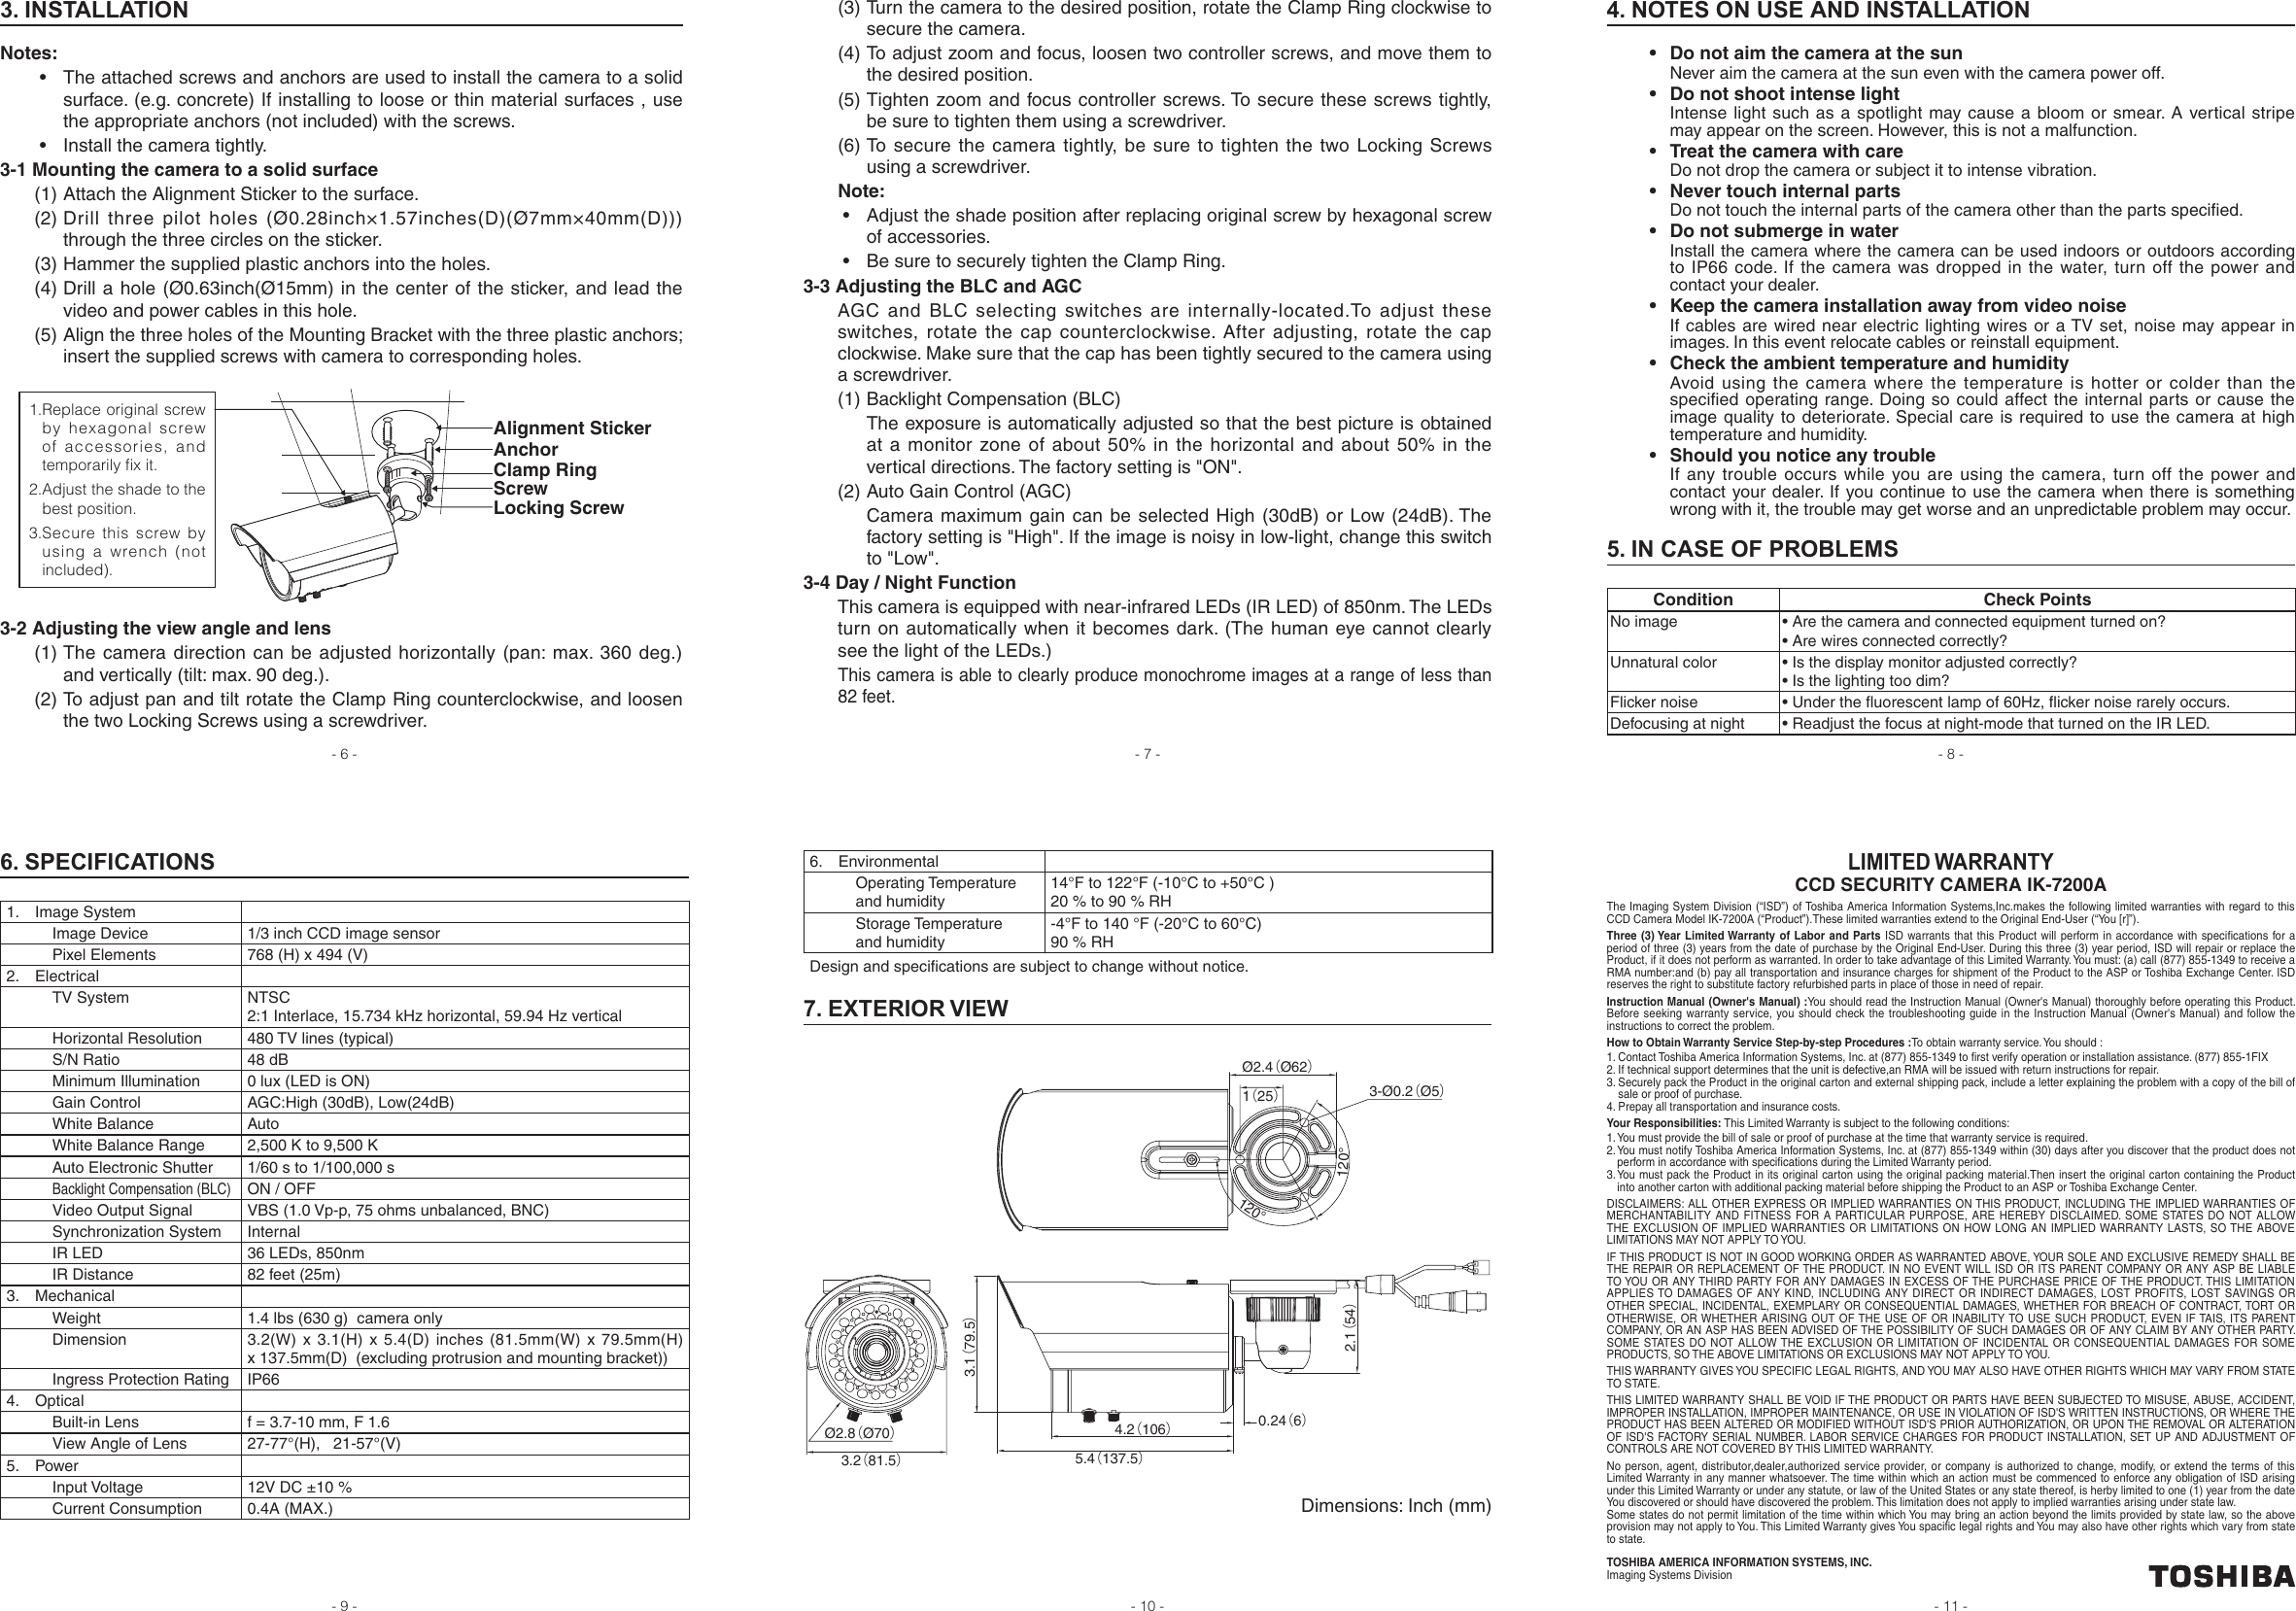 Page 2 of 2 - Toshiba Toshiba-Ik-7200A-Instruction-Manual- 0703c1_DFK_IK_DF7200A面付け  Toshiba-ik-7200a-instruction-manual